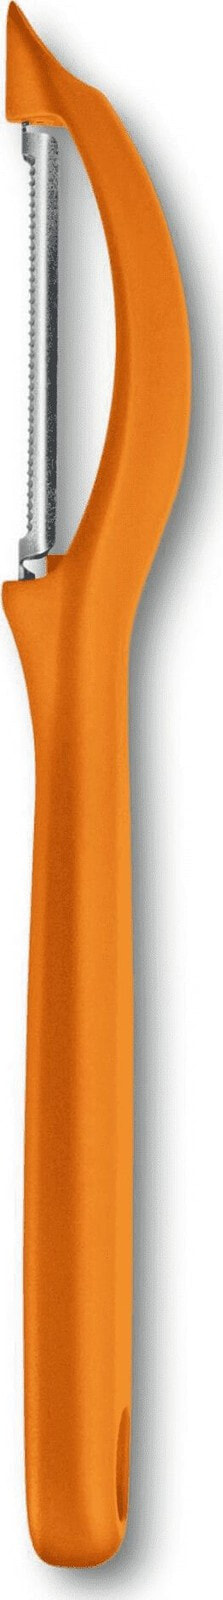 Victorinox Multi-purpose peeler, serrated blade, orange